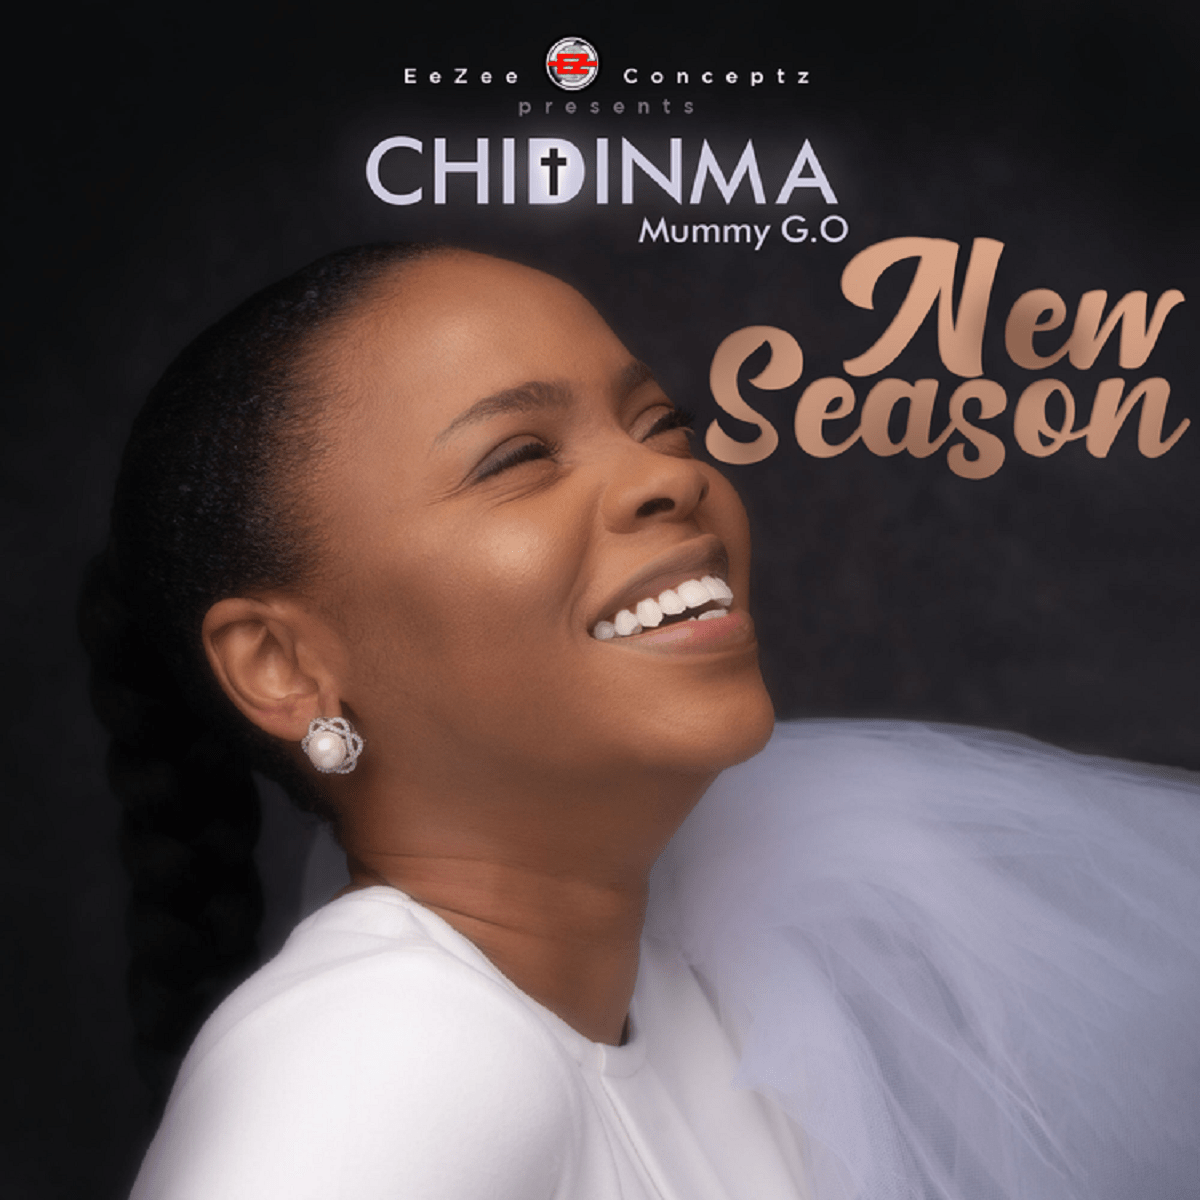 Chidinma New Season